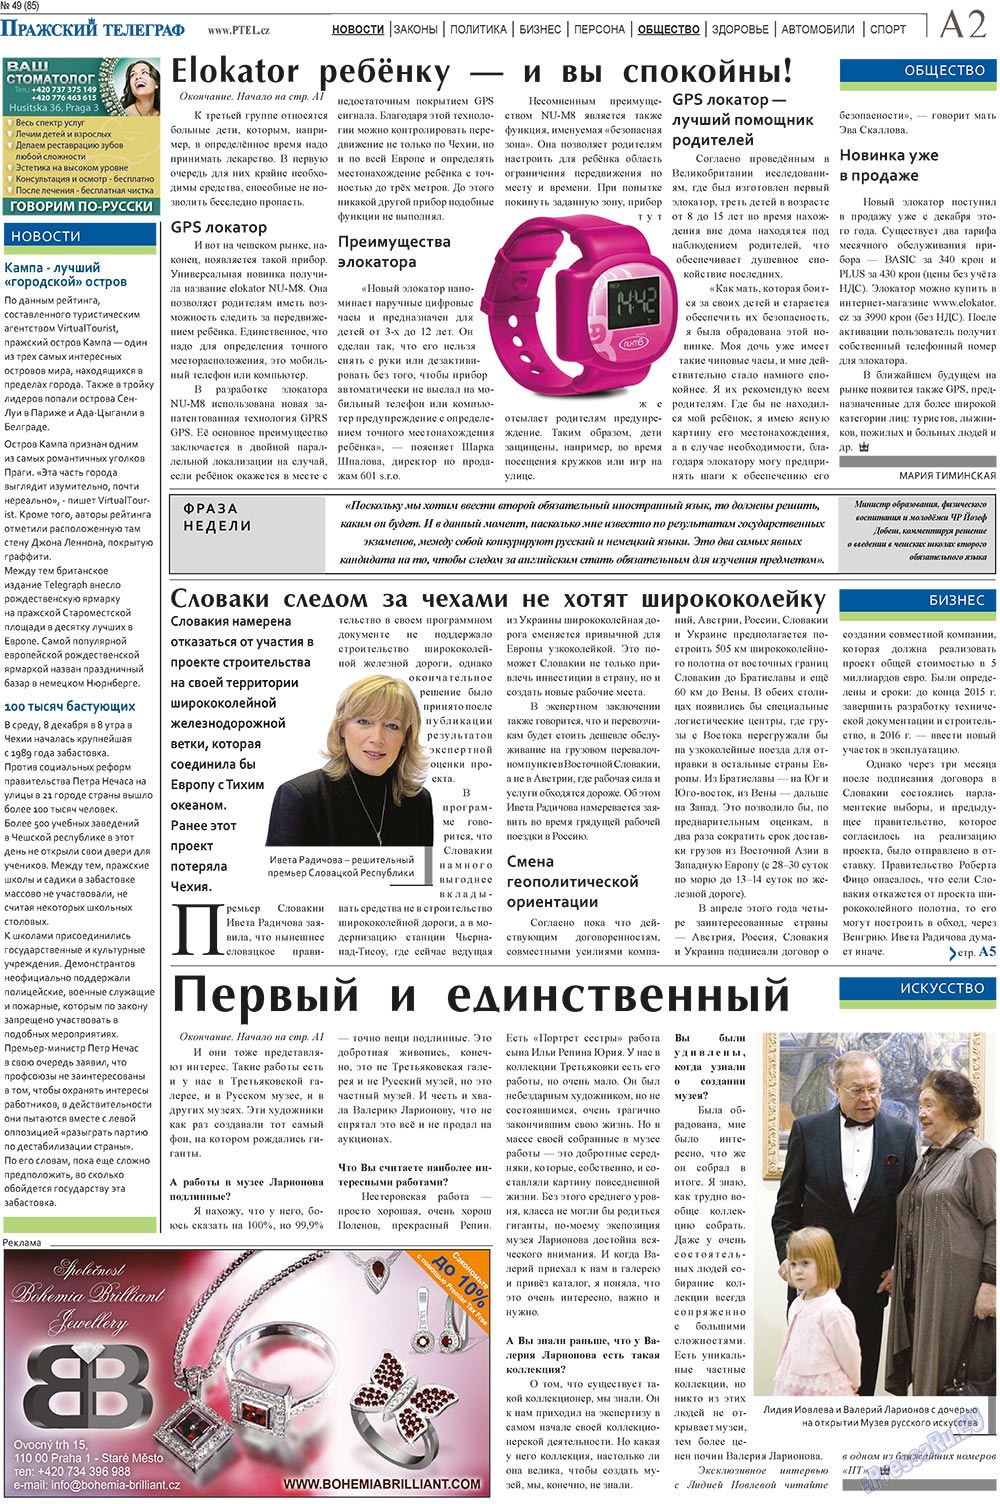 Пражский телеграф, газета. 2010 №49 стр.2